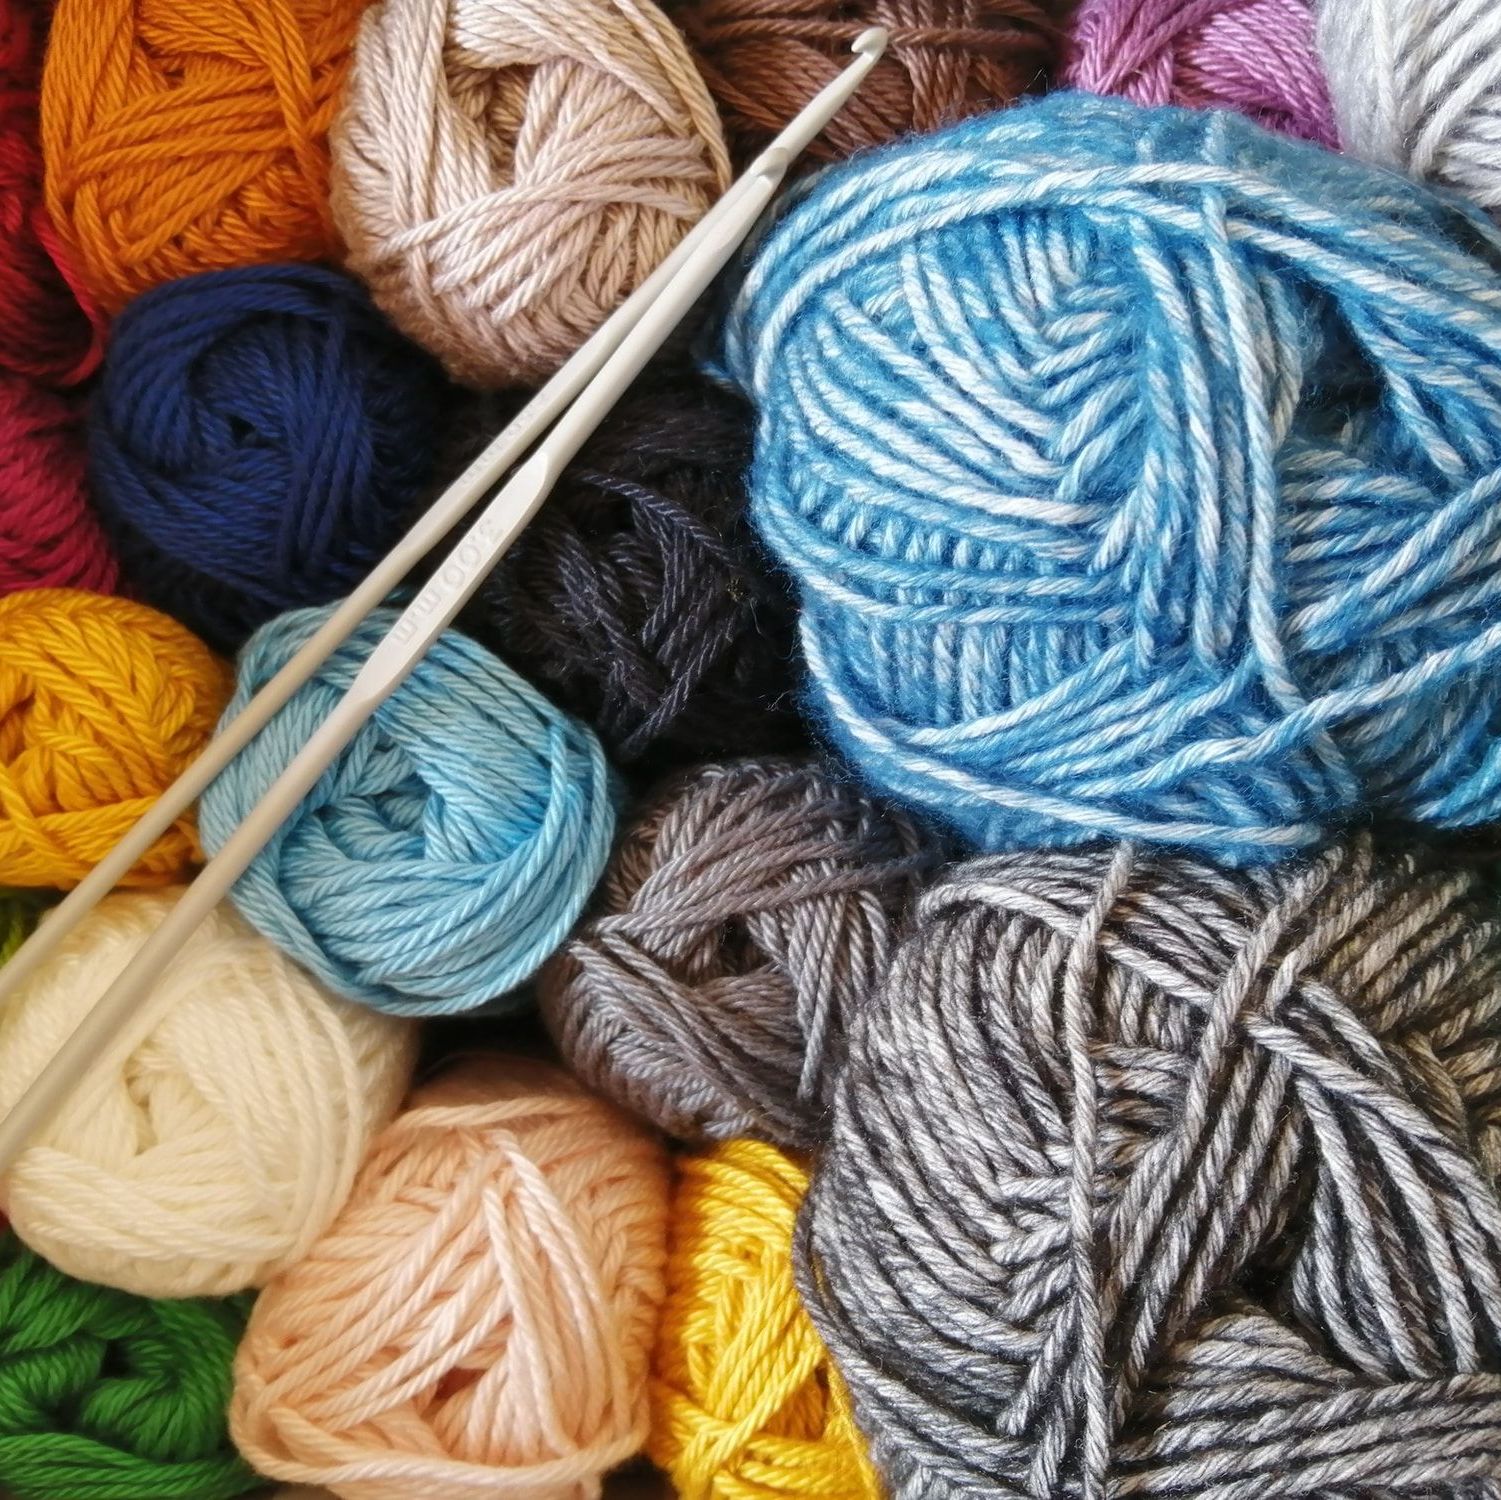 haberdashery online uk, lewis and irene fabric, king cole aran wool, stylecraft wool